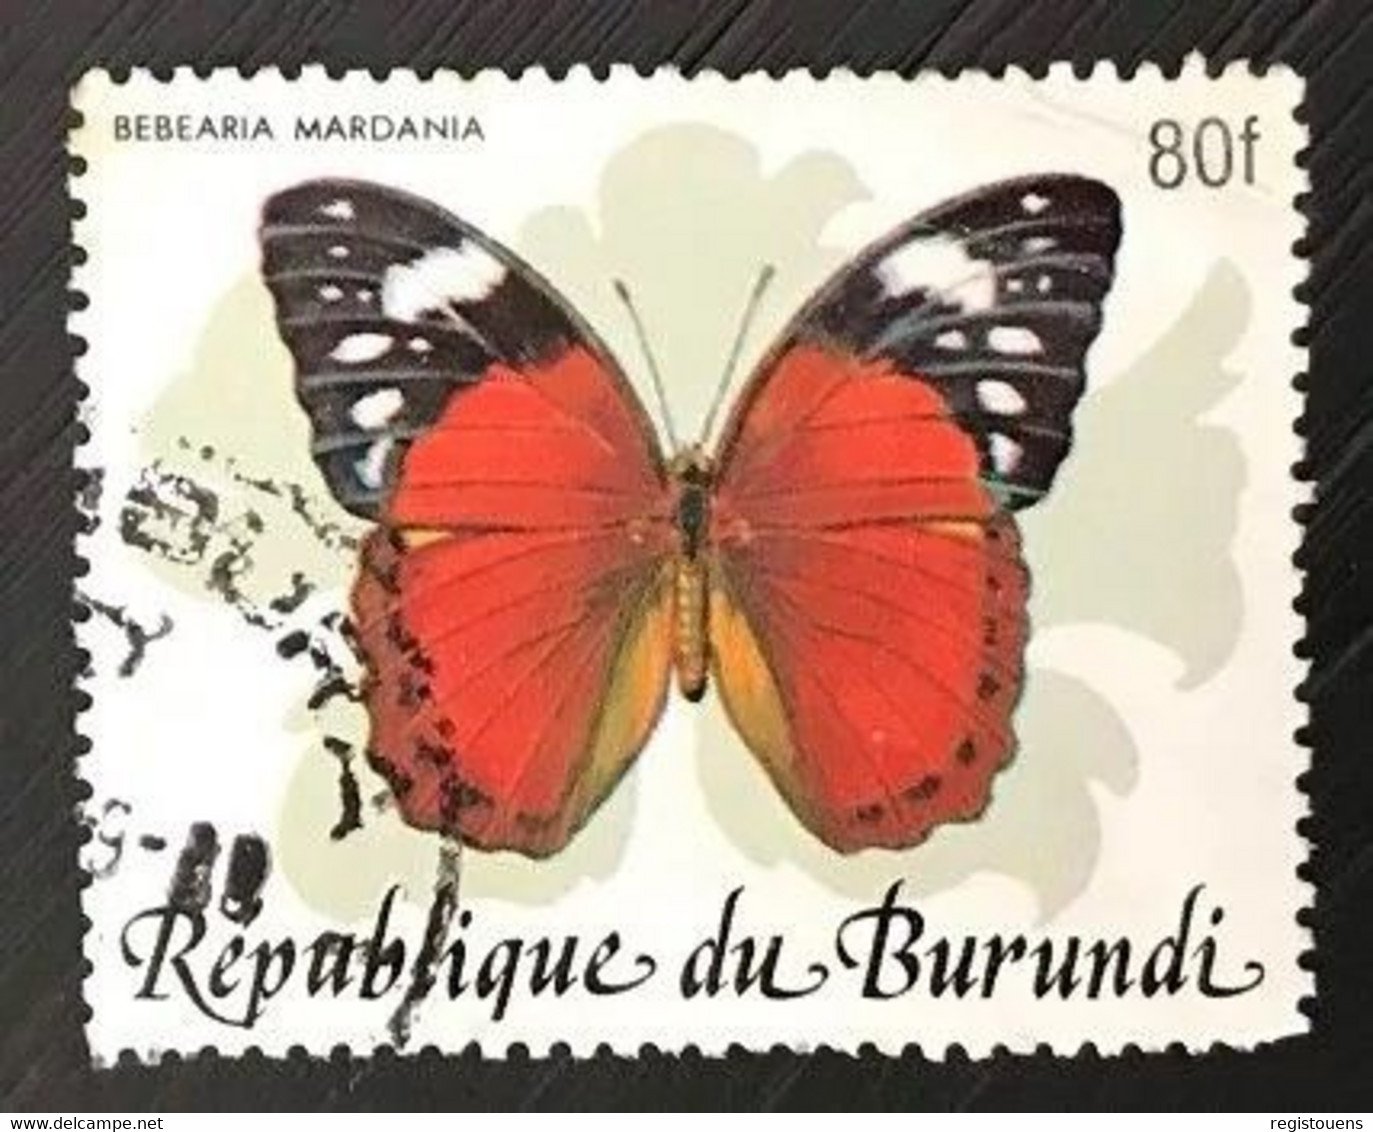 Timbre Oblitéré Burundi 1989 Mardania - Used Stamps